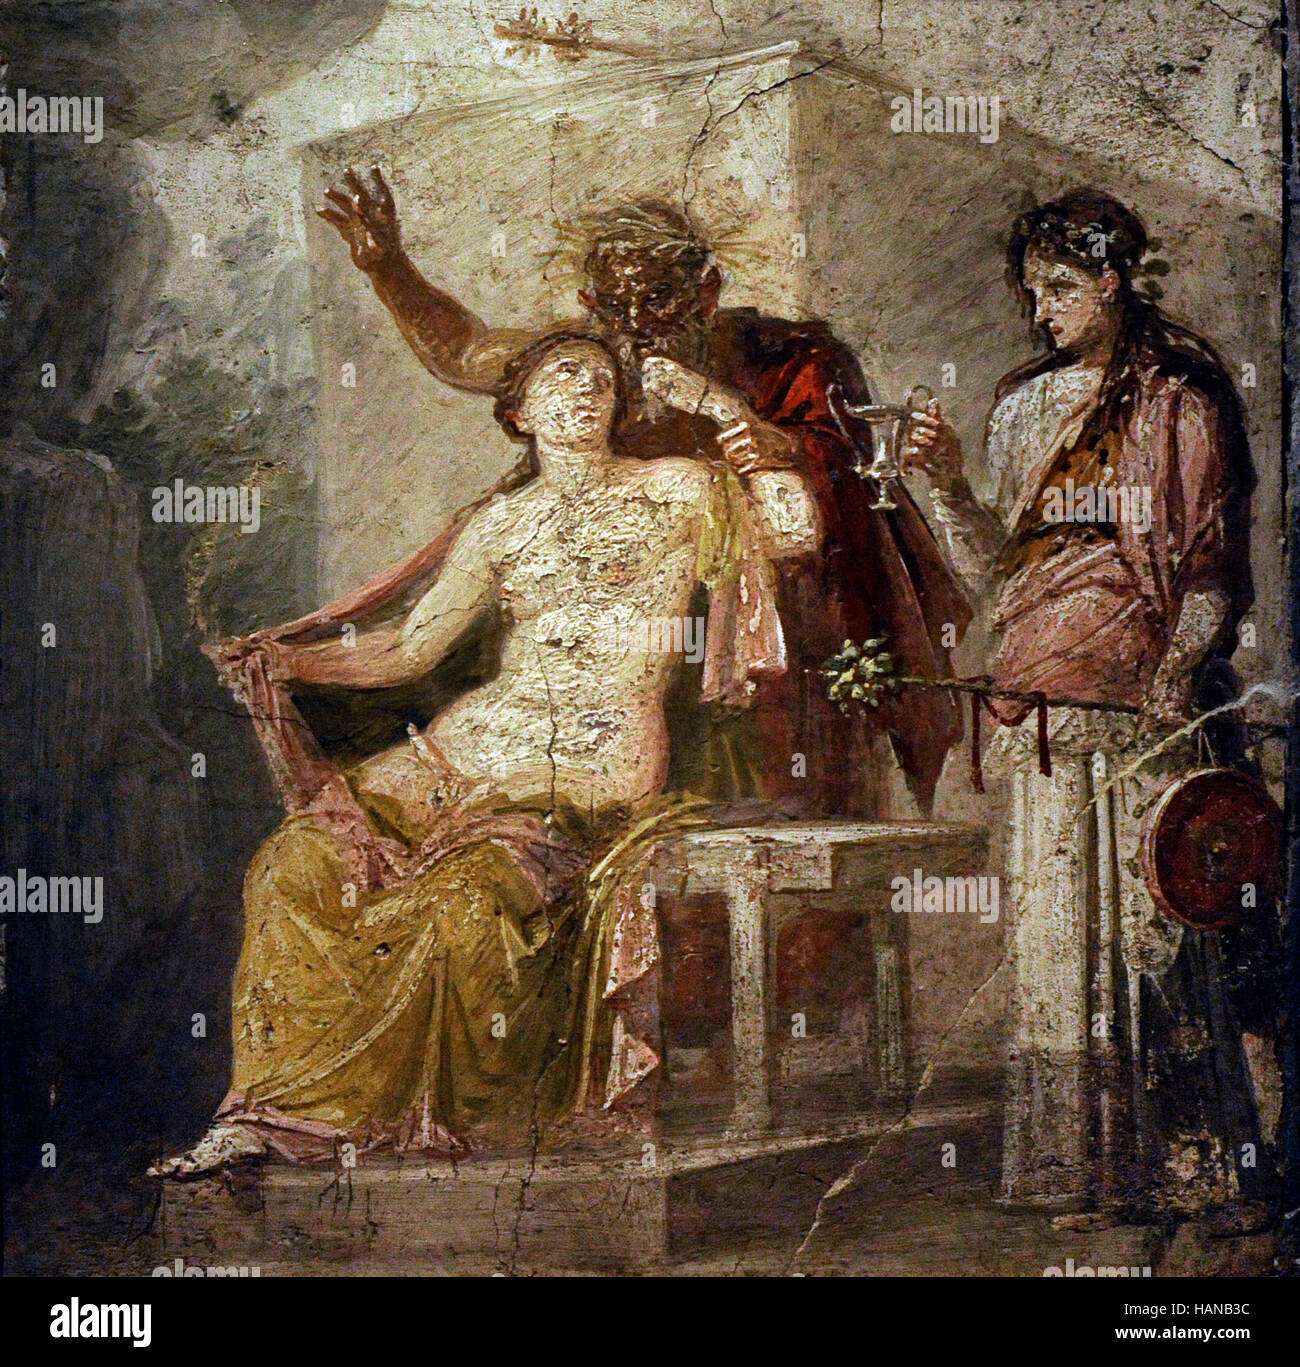 Hermaphroditus, Silenus and maenad with thyrsus. Roman fresco. Pompeii, House of M. Epidi Sabini, IX-1-22. 1st century AD. National Archaeological Museum, Naples. Italy. Stock Photo